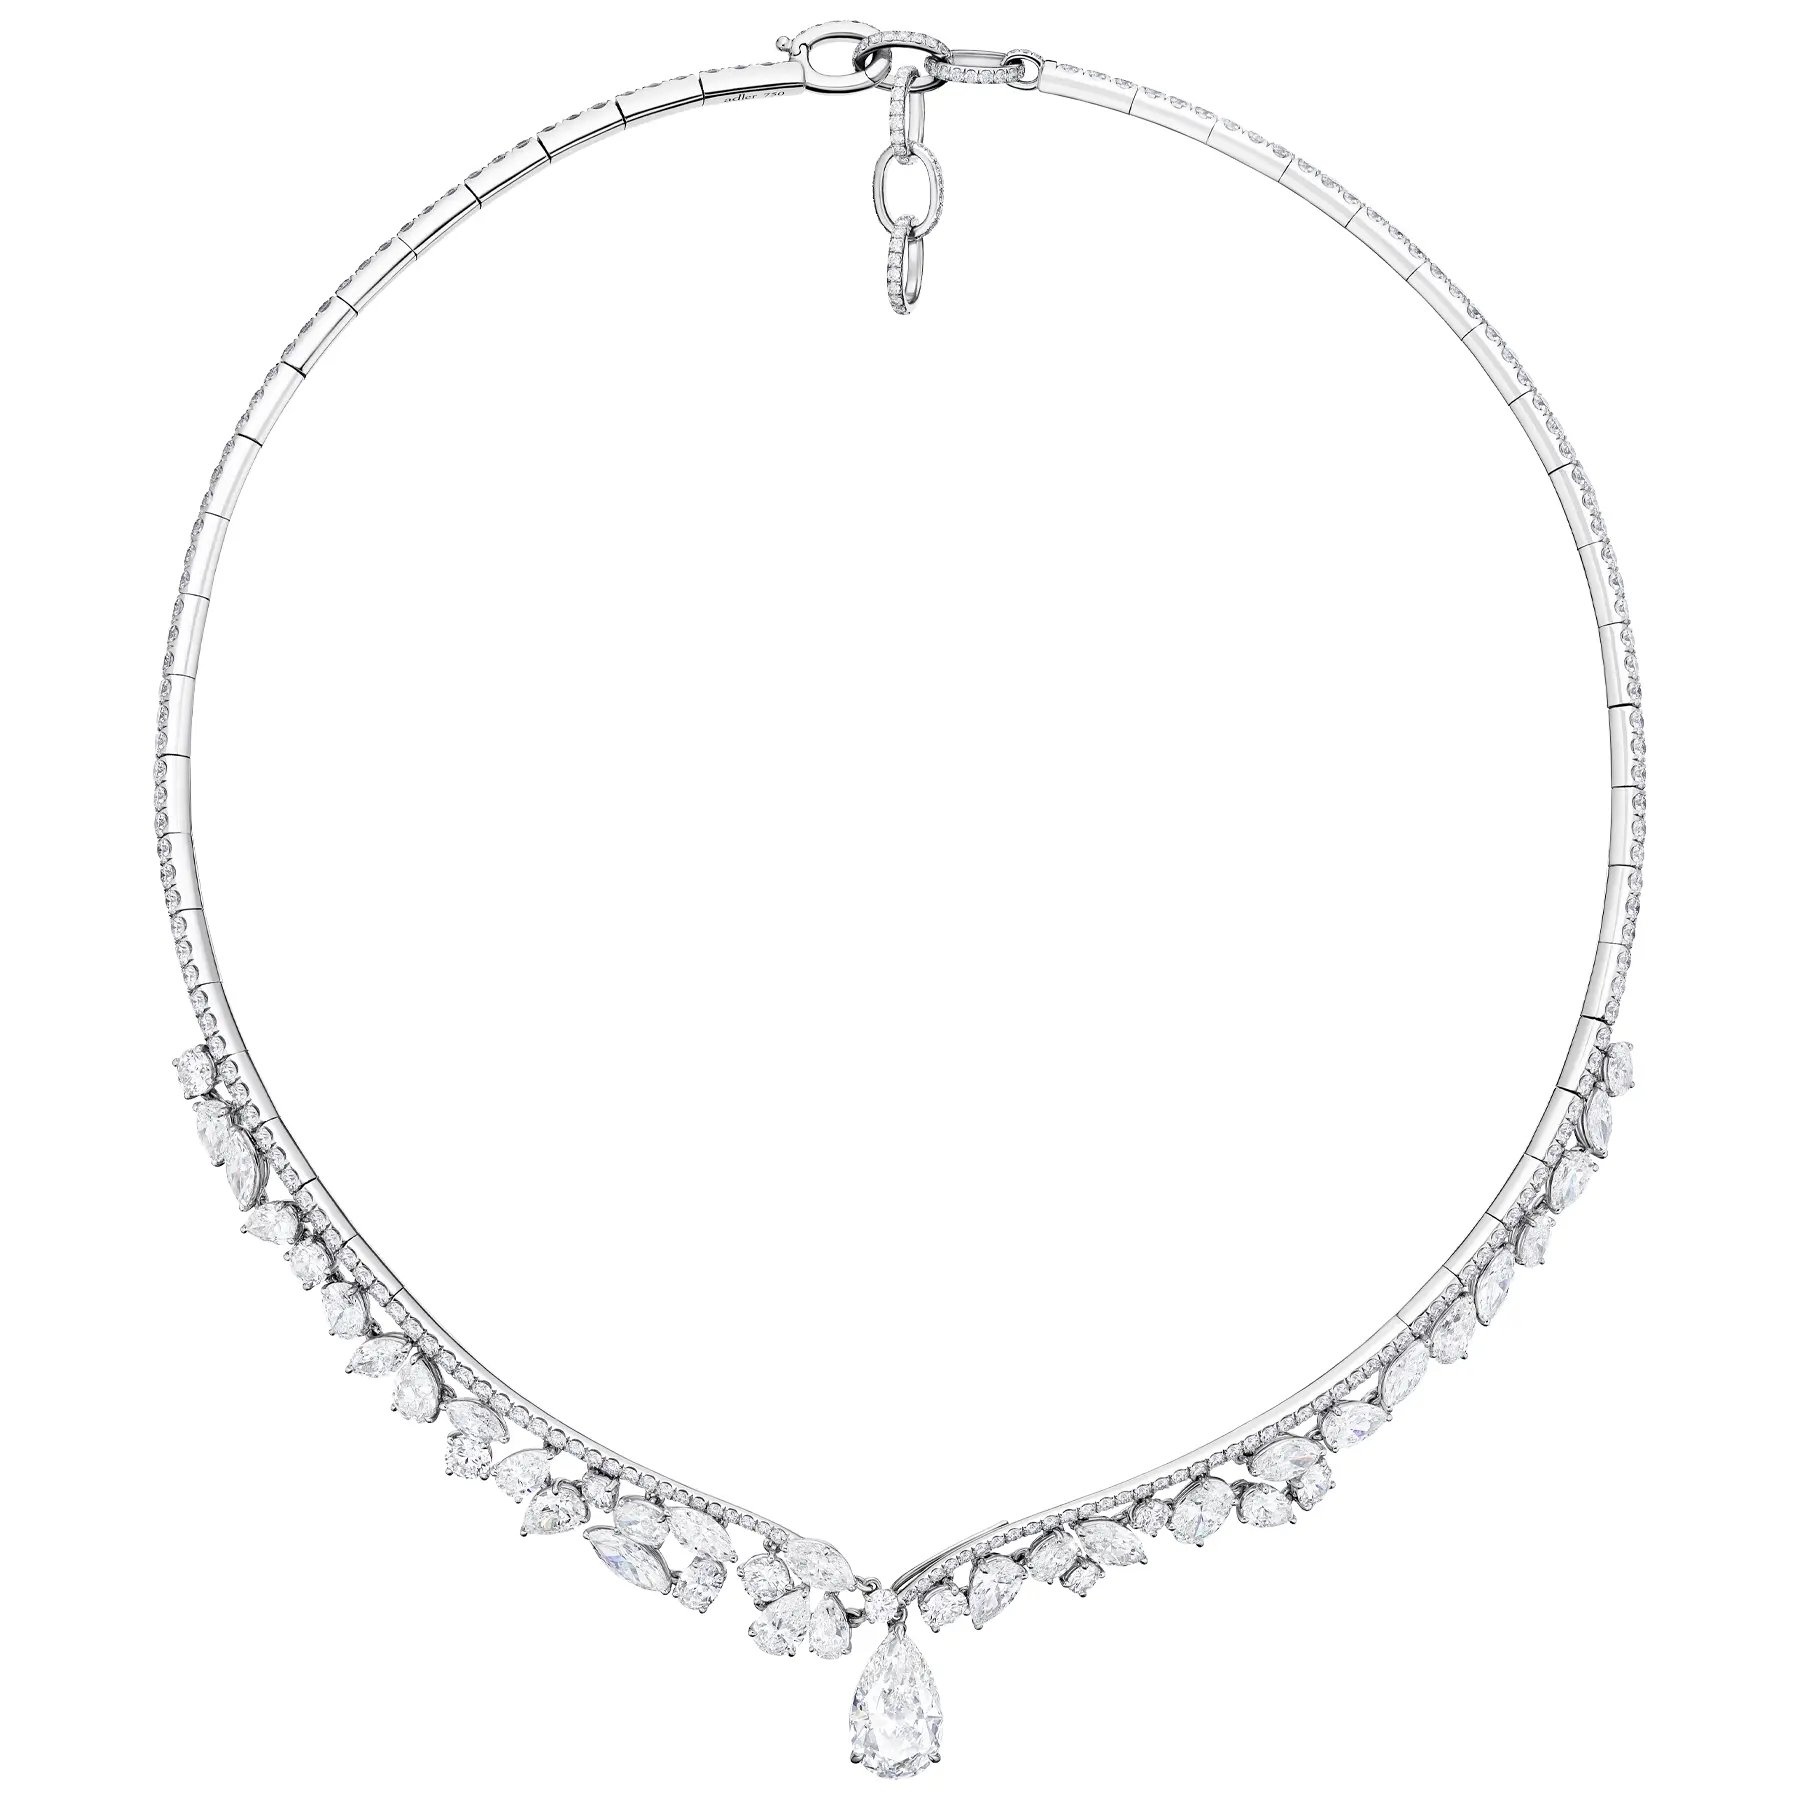 Tivoli necklace by Adler Joailliers